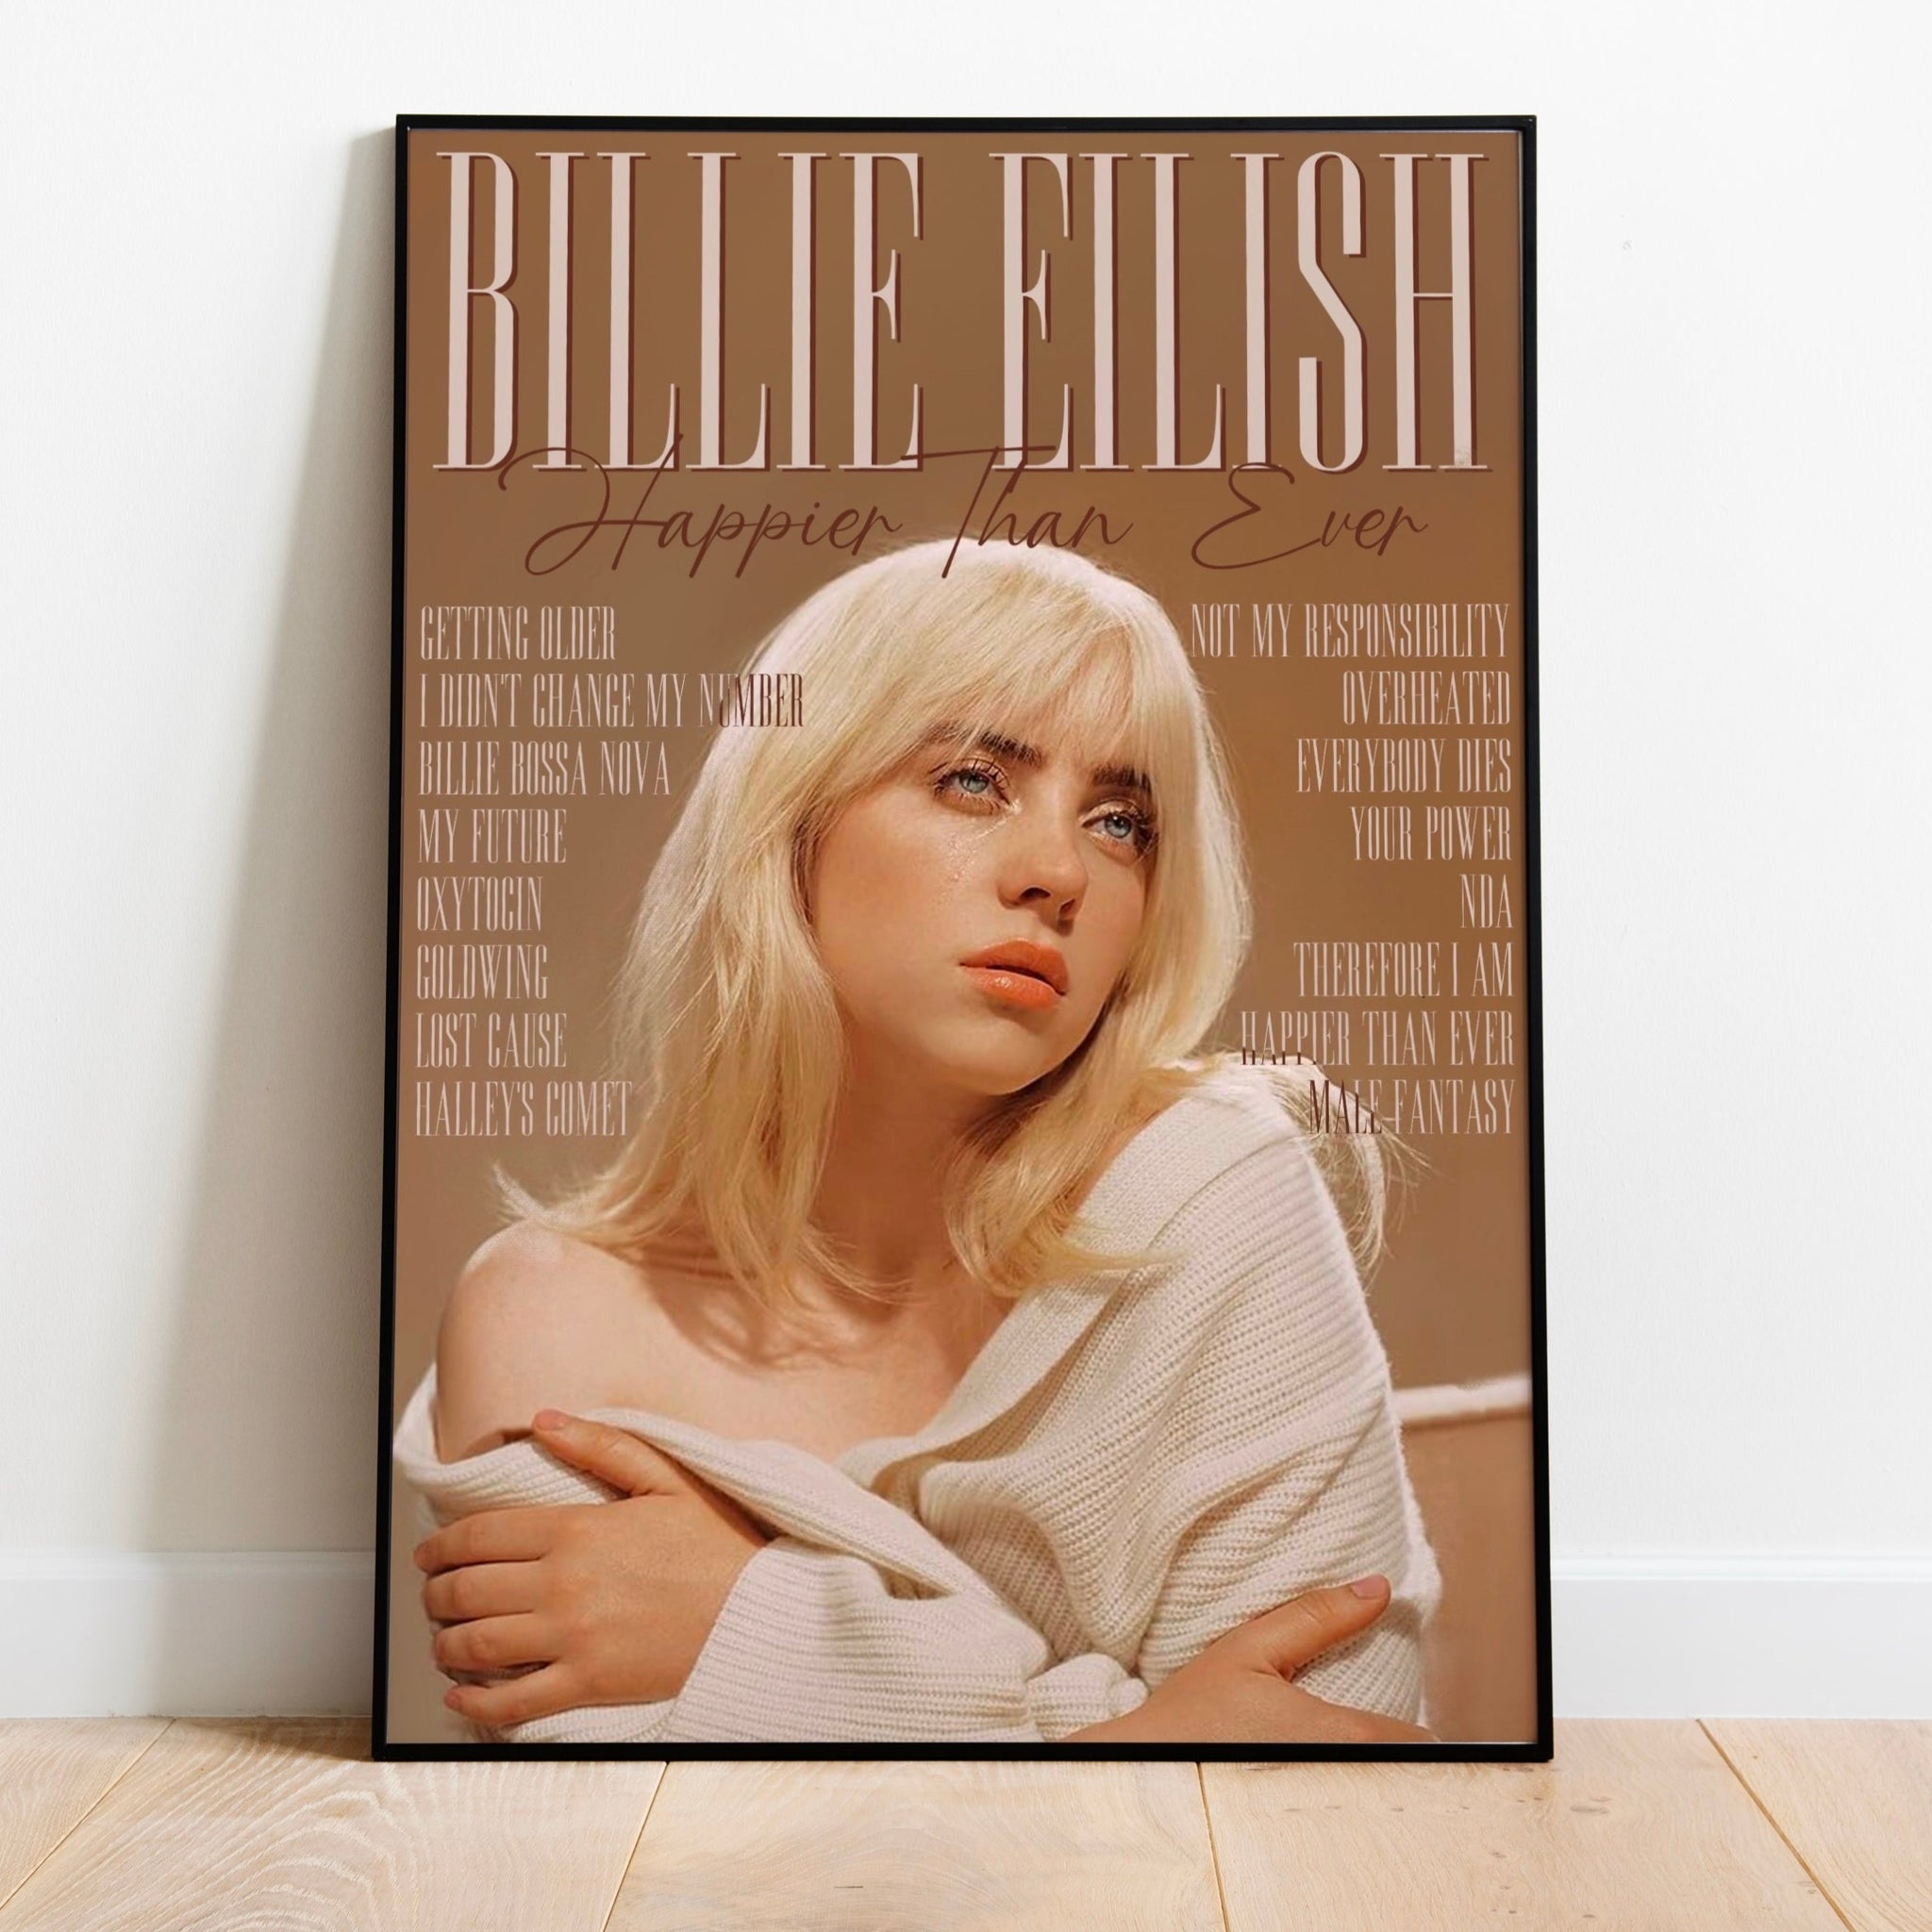 Billie Eilish Happier Than Ever review